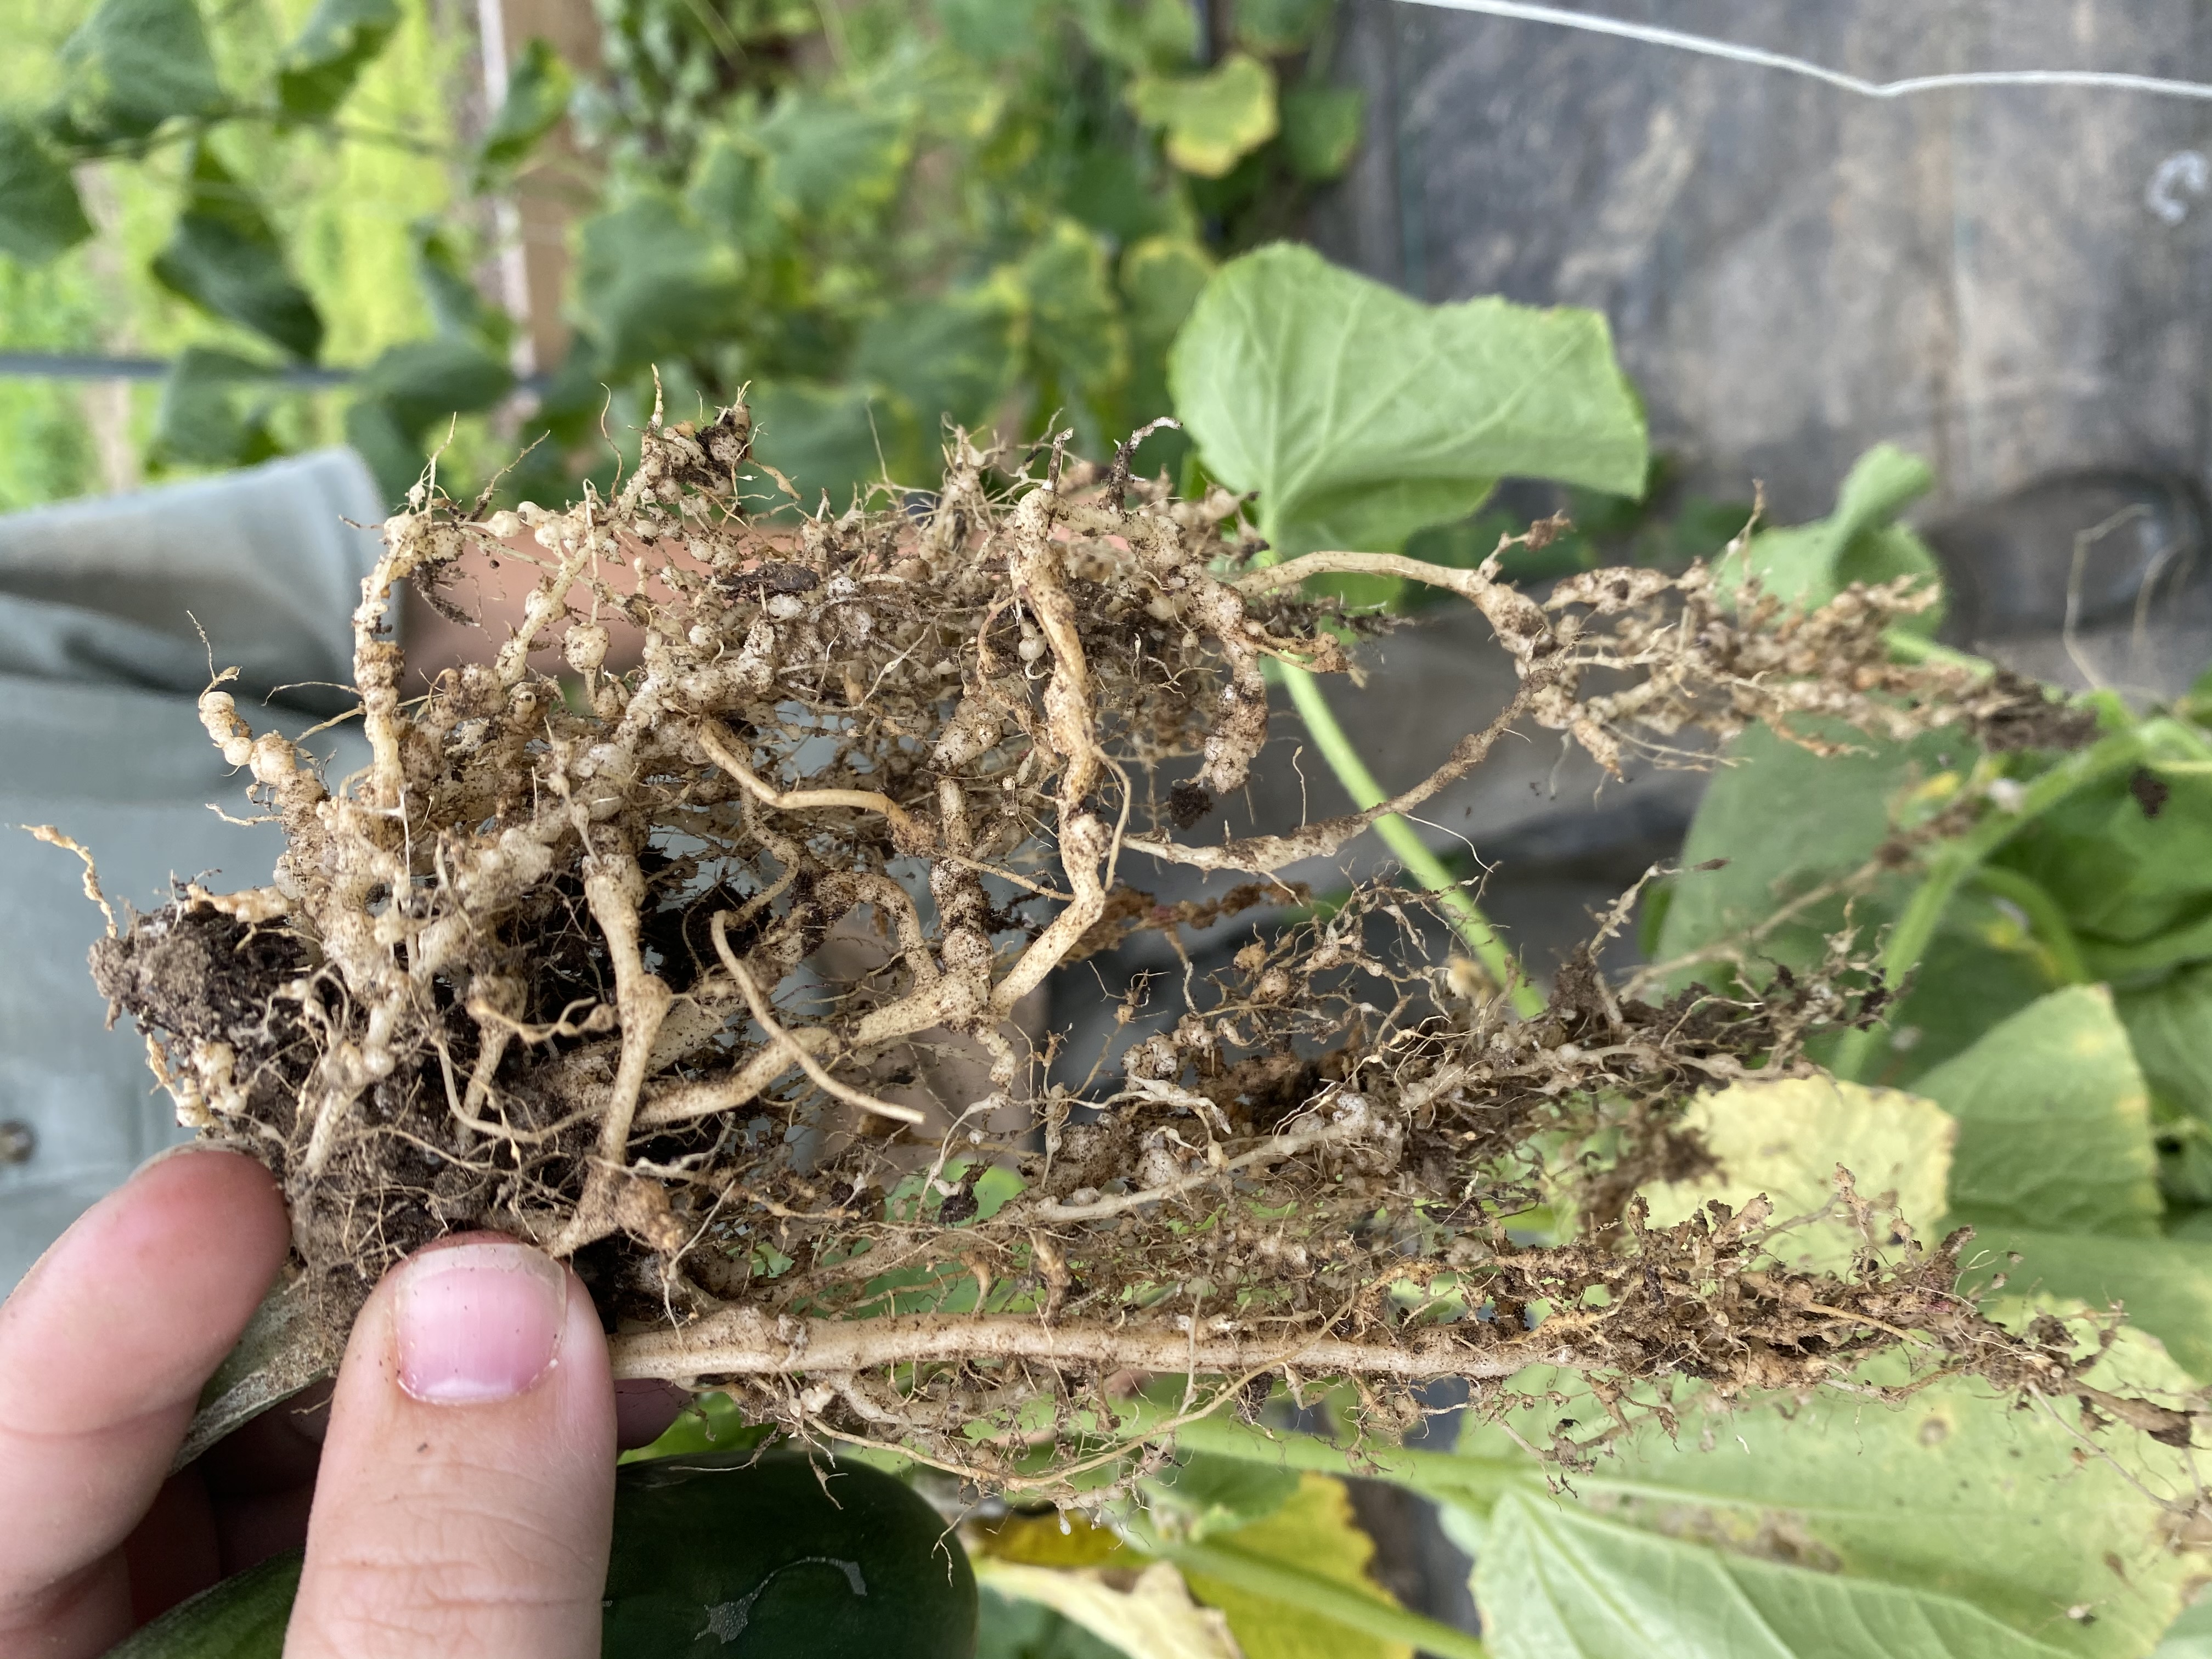 root nematodes on plant roots